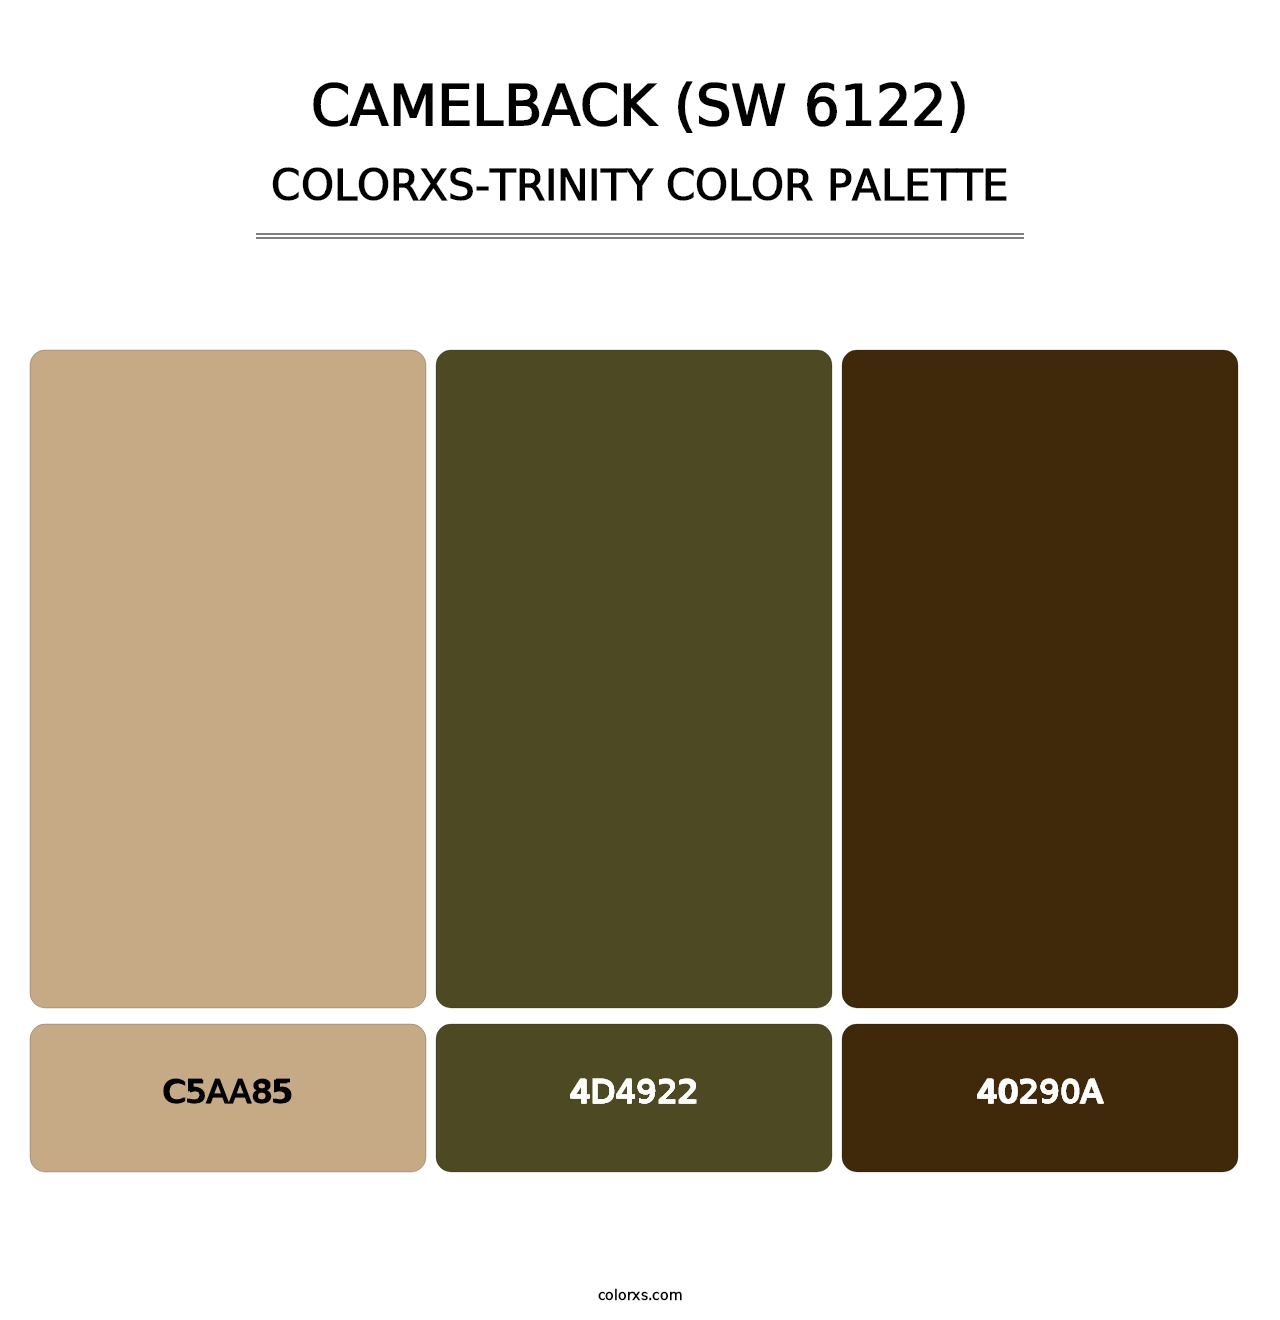 Camelback (SW 6122) - Colorxs Trinity Palette